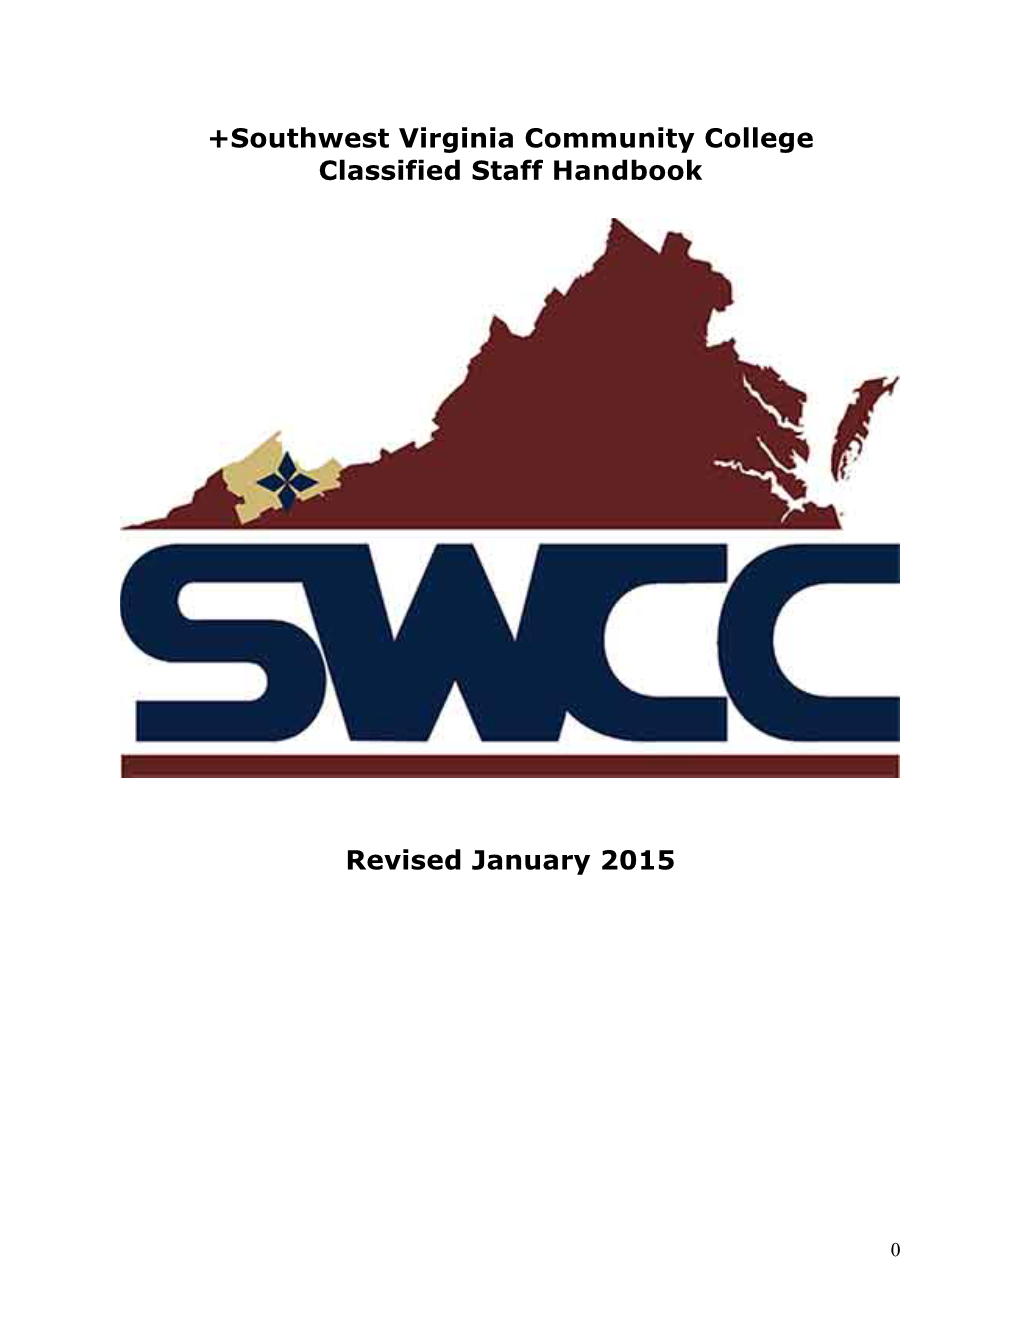 2015 Classified Staff Handbook